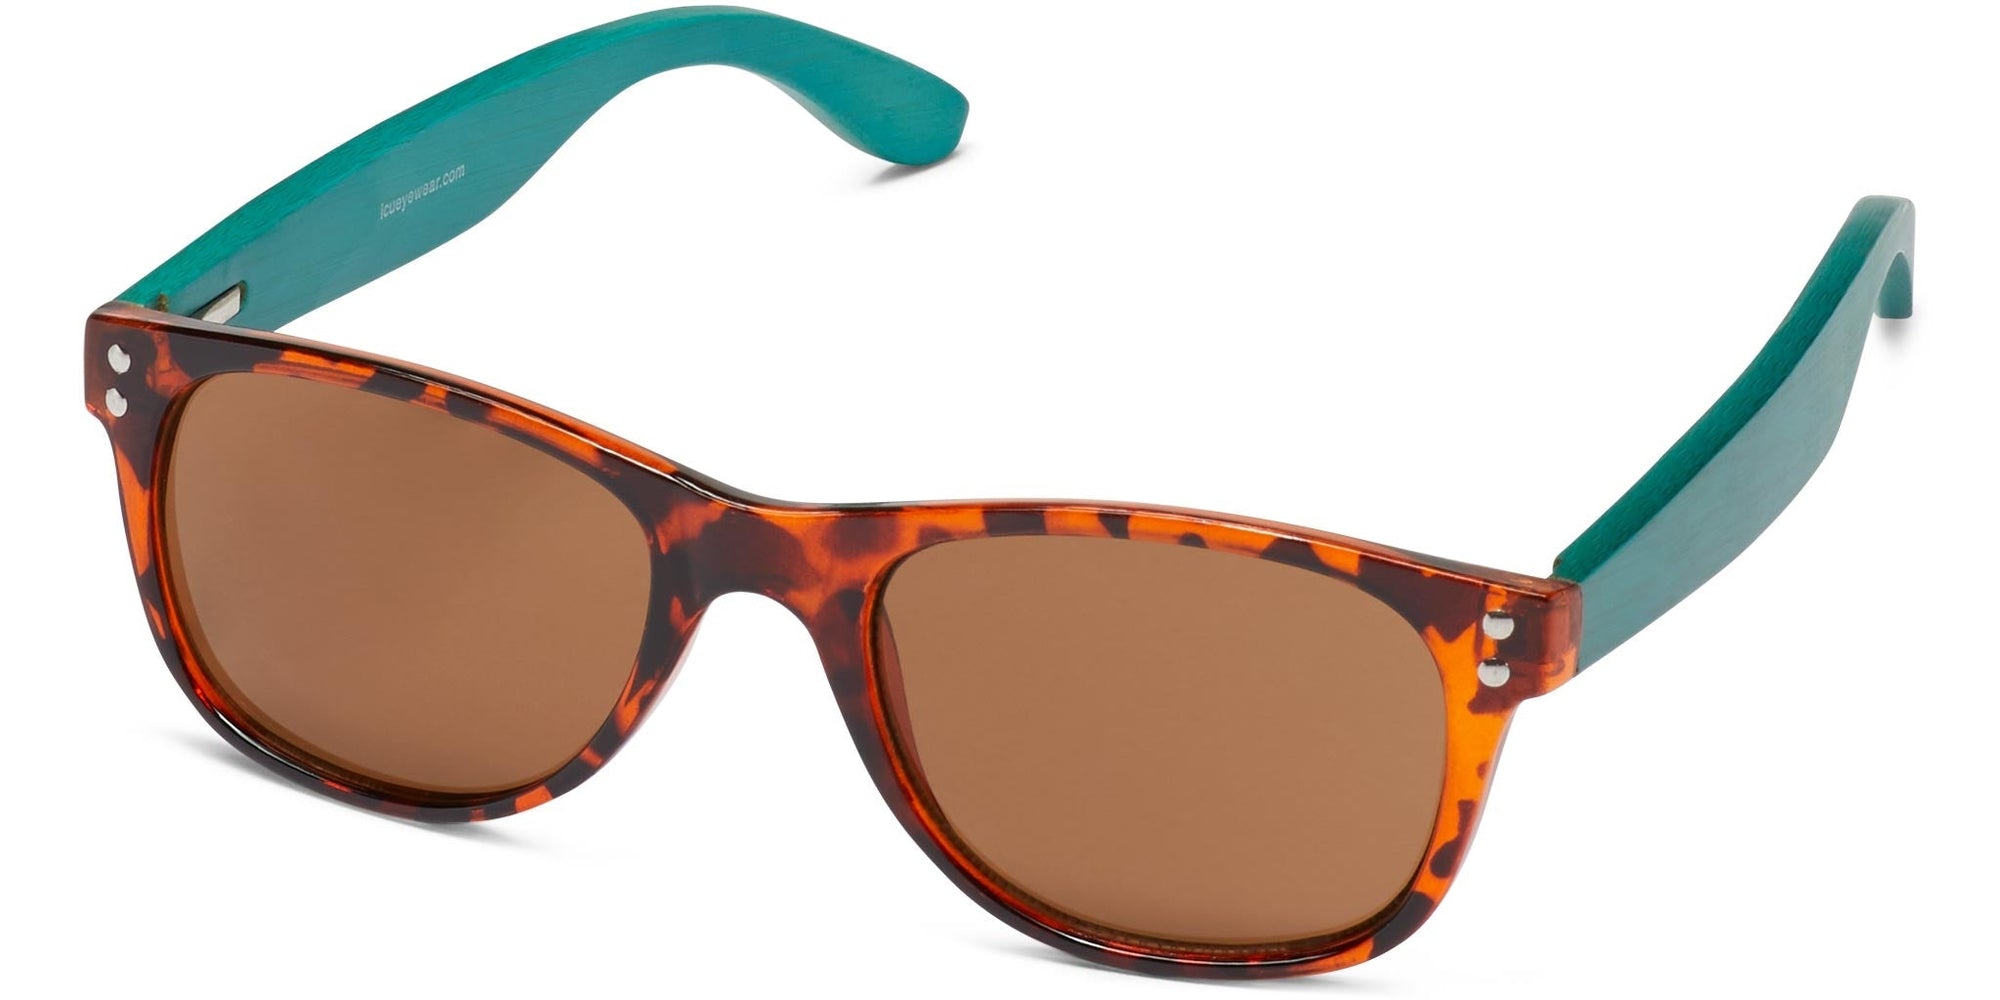 Genoa - Tortoise/Teal Bamboo / Brown Lens - Sunglasses